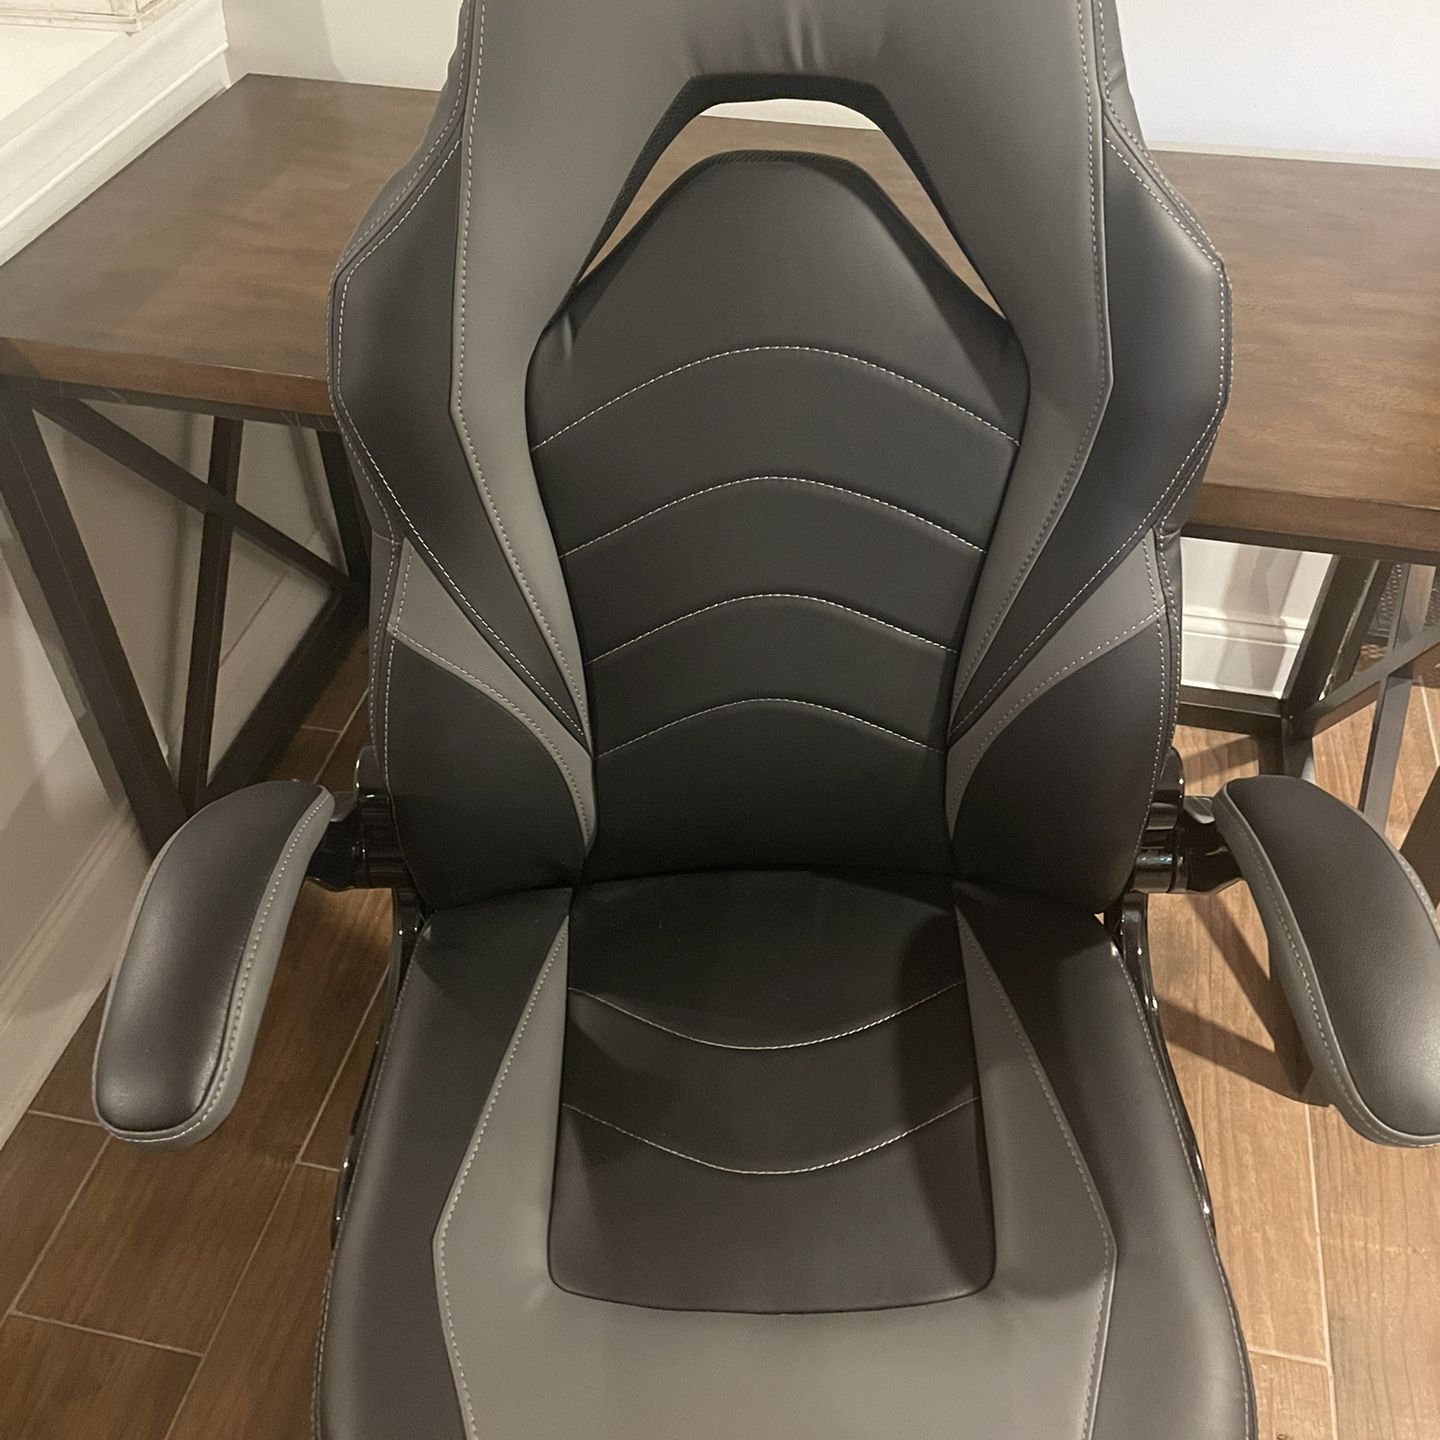 Emerge Vortex Bonded Leather Ergonomic Gaming Chair 